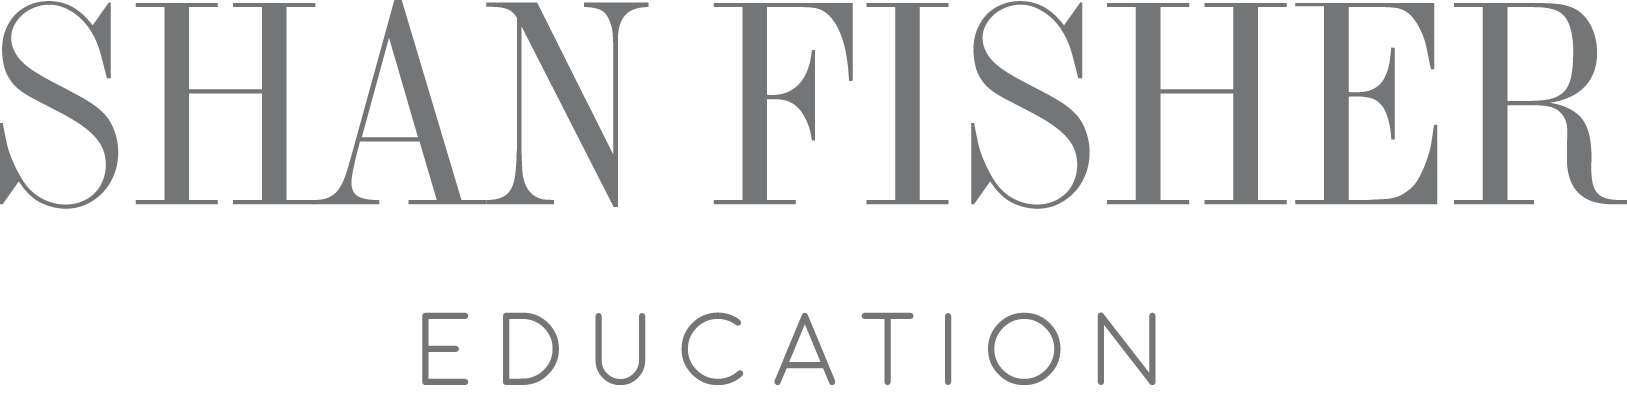 Shan-Fisher-Education-Grey